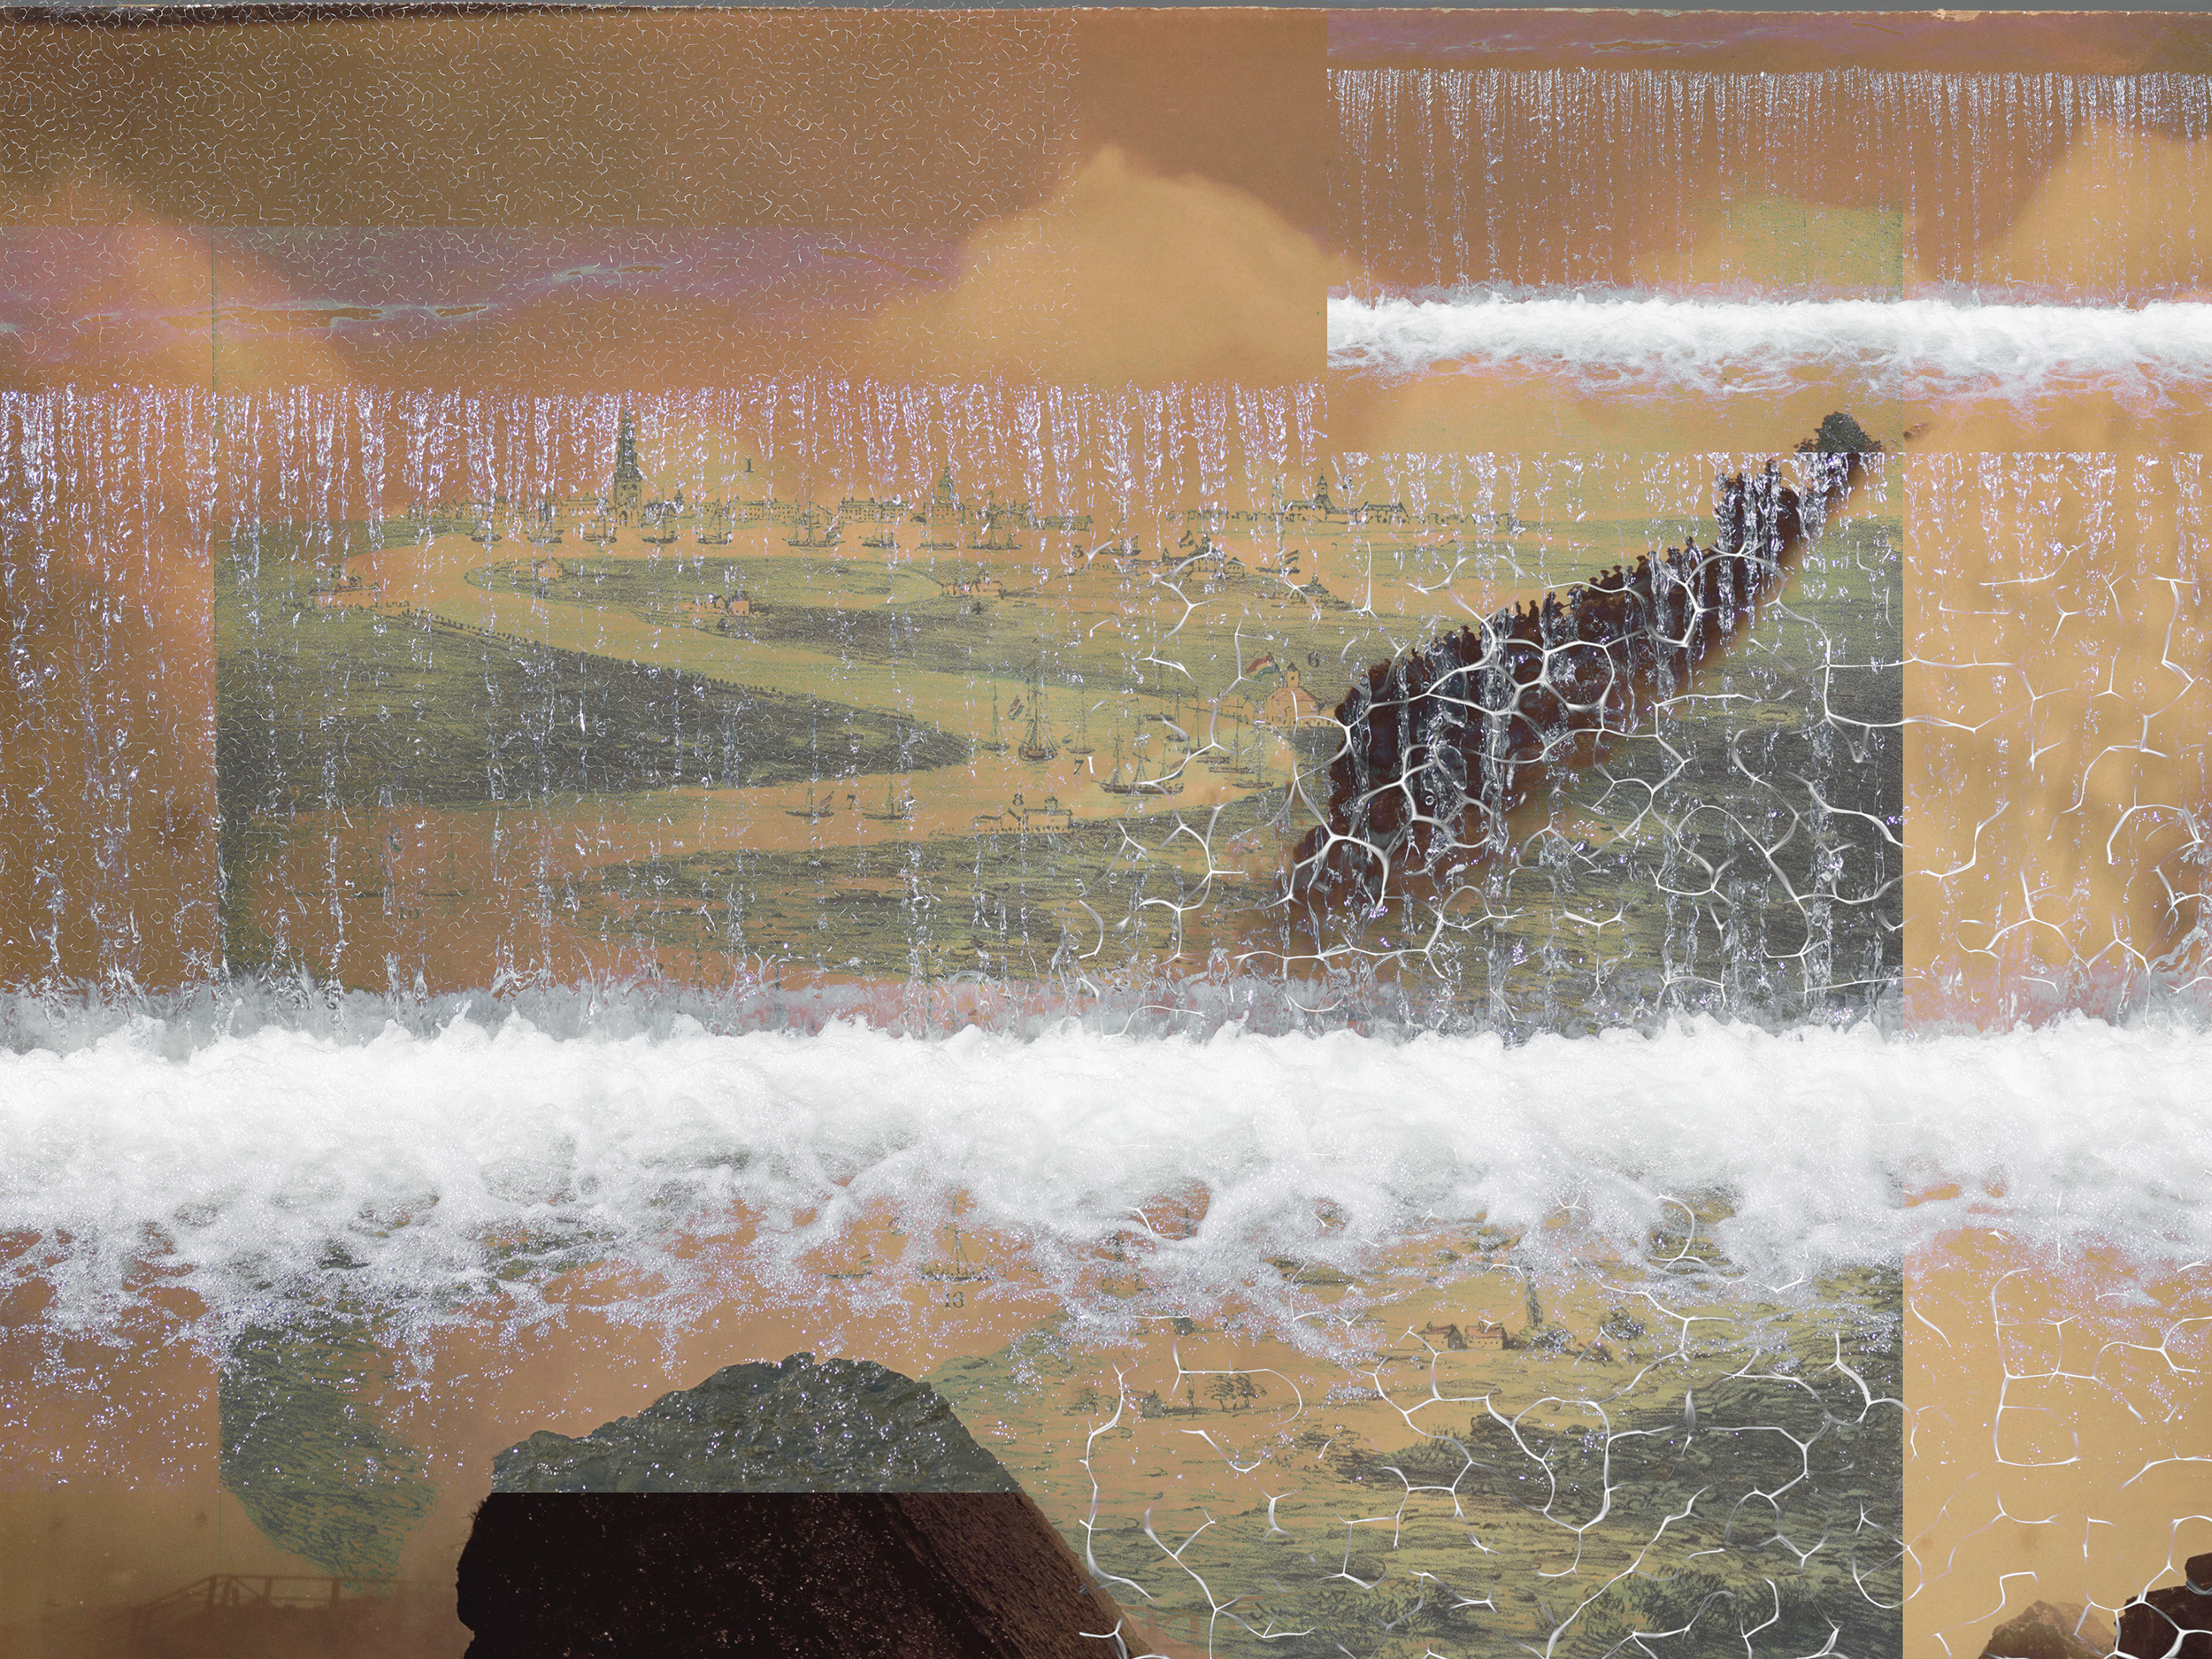 04 102019 11b Waterfall Animated Water Caustics